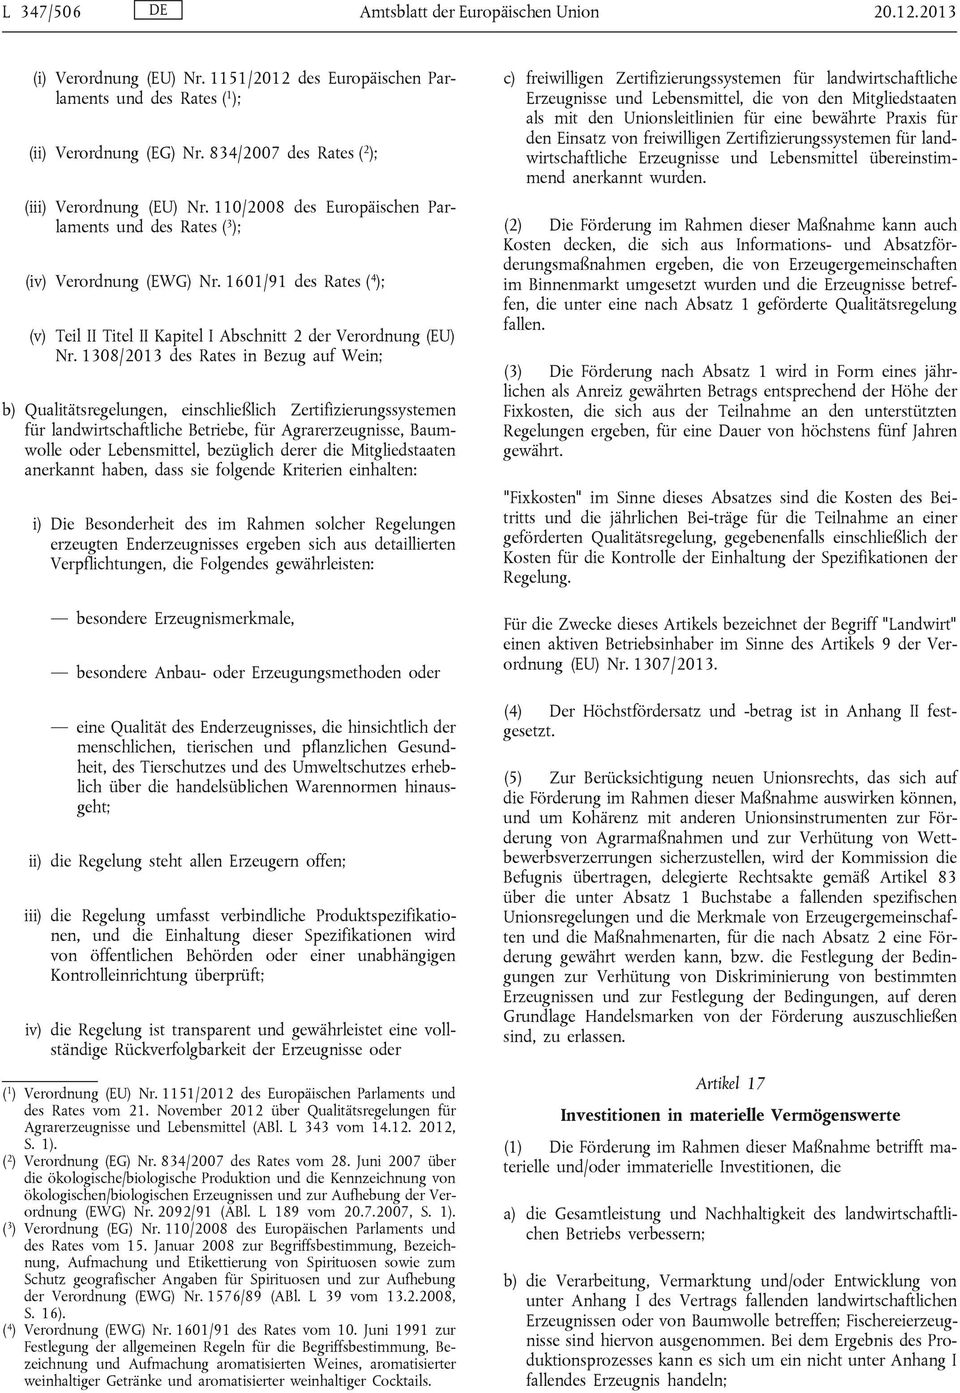 1601/91 des Rates ( 4 ); (v) Teil II Titel II Kapitel I Abschnitt 2 der Verordnung (EU) Nr.